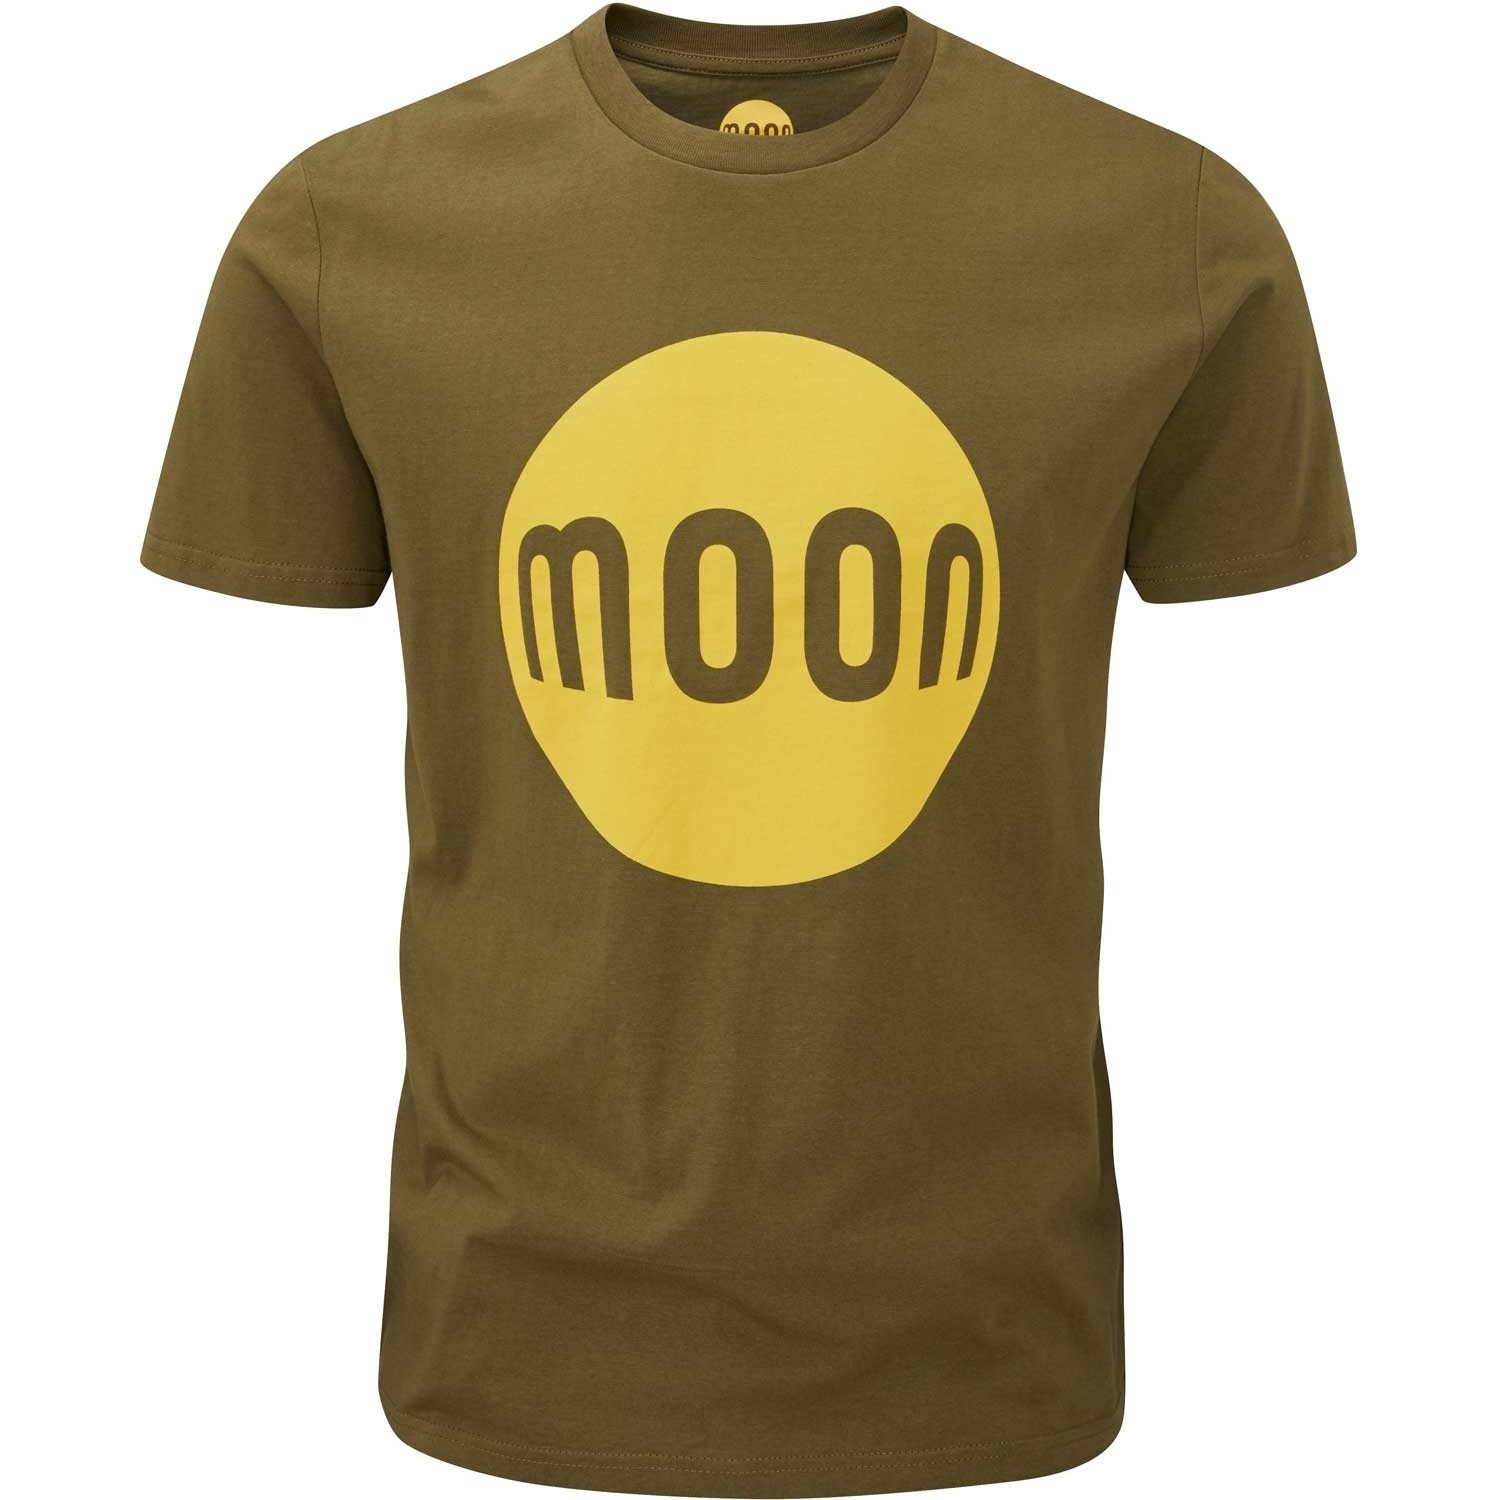 Moon Logo Tee - Men's - Khaki